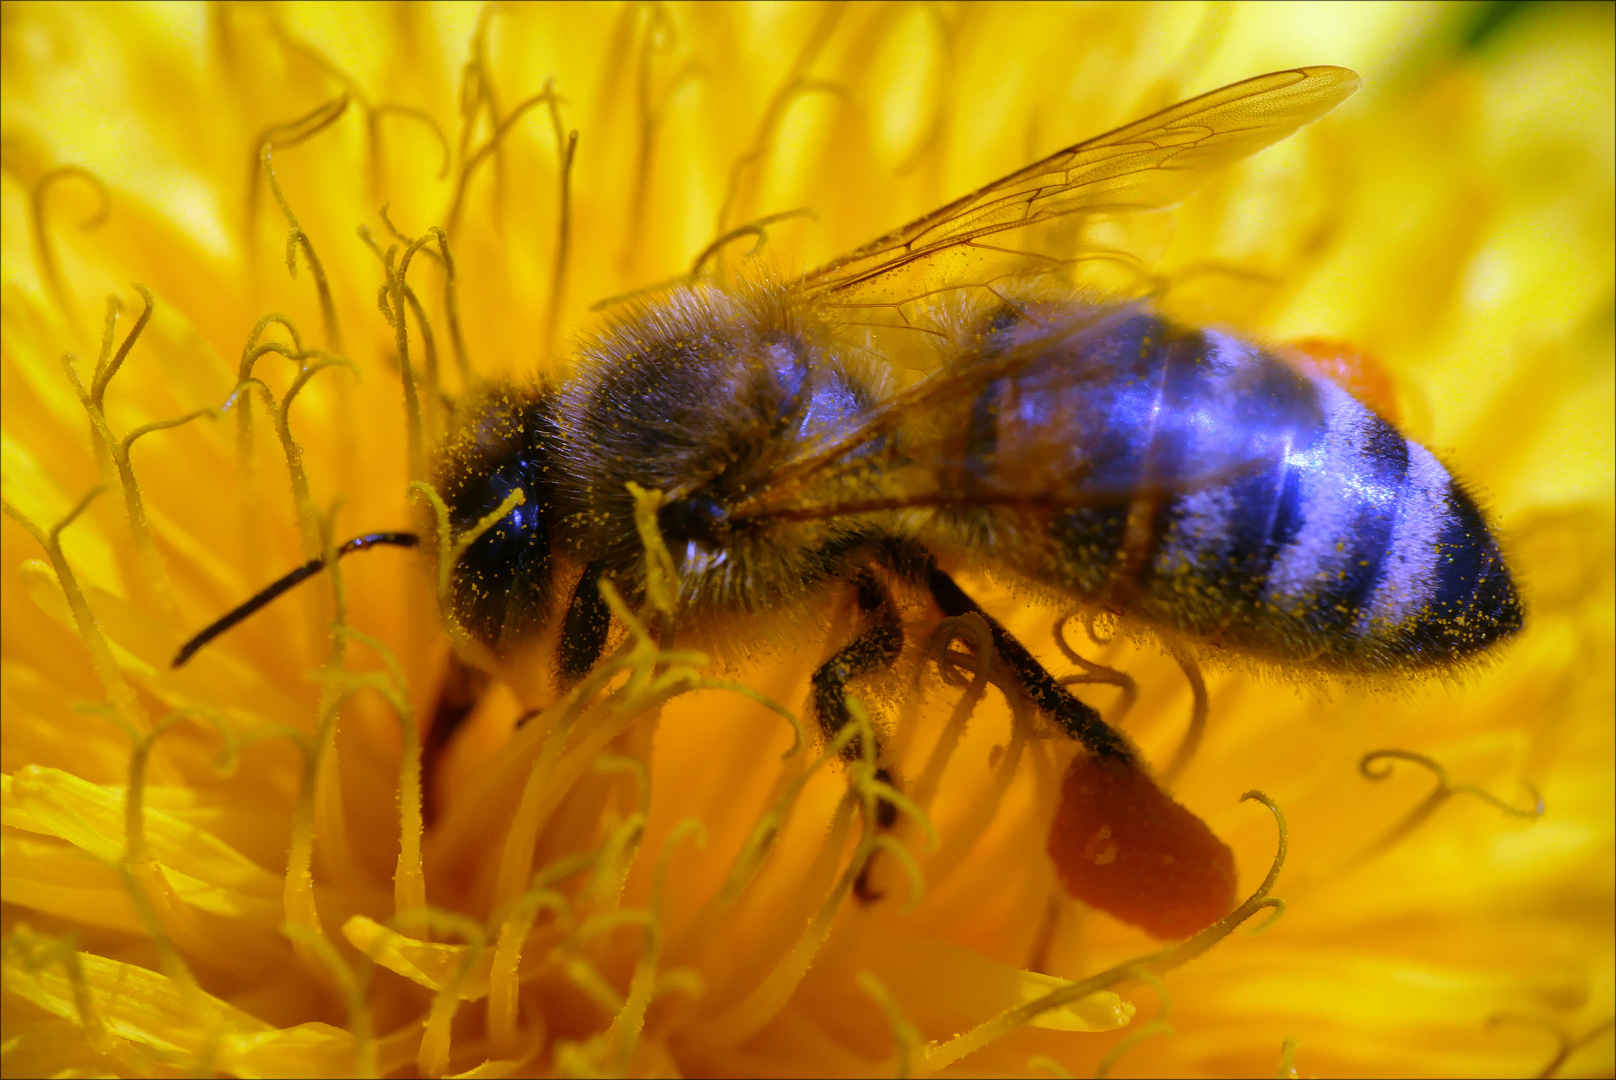 Fleißige Biene